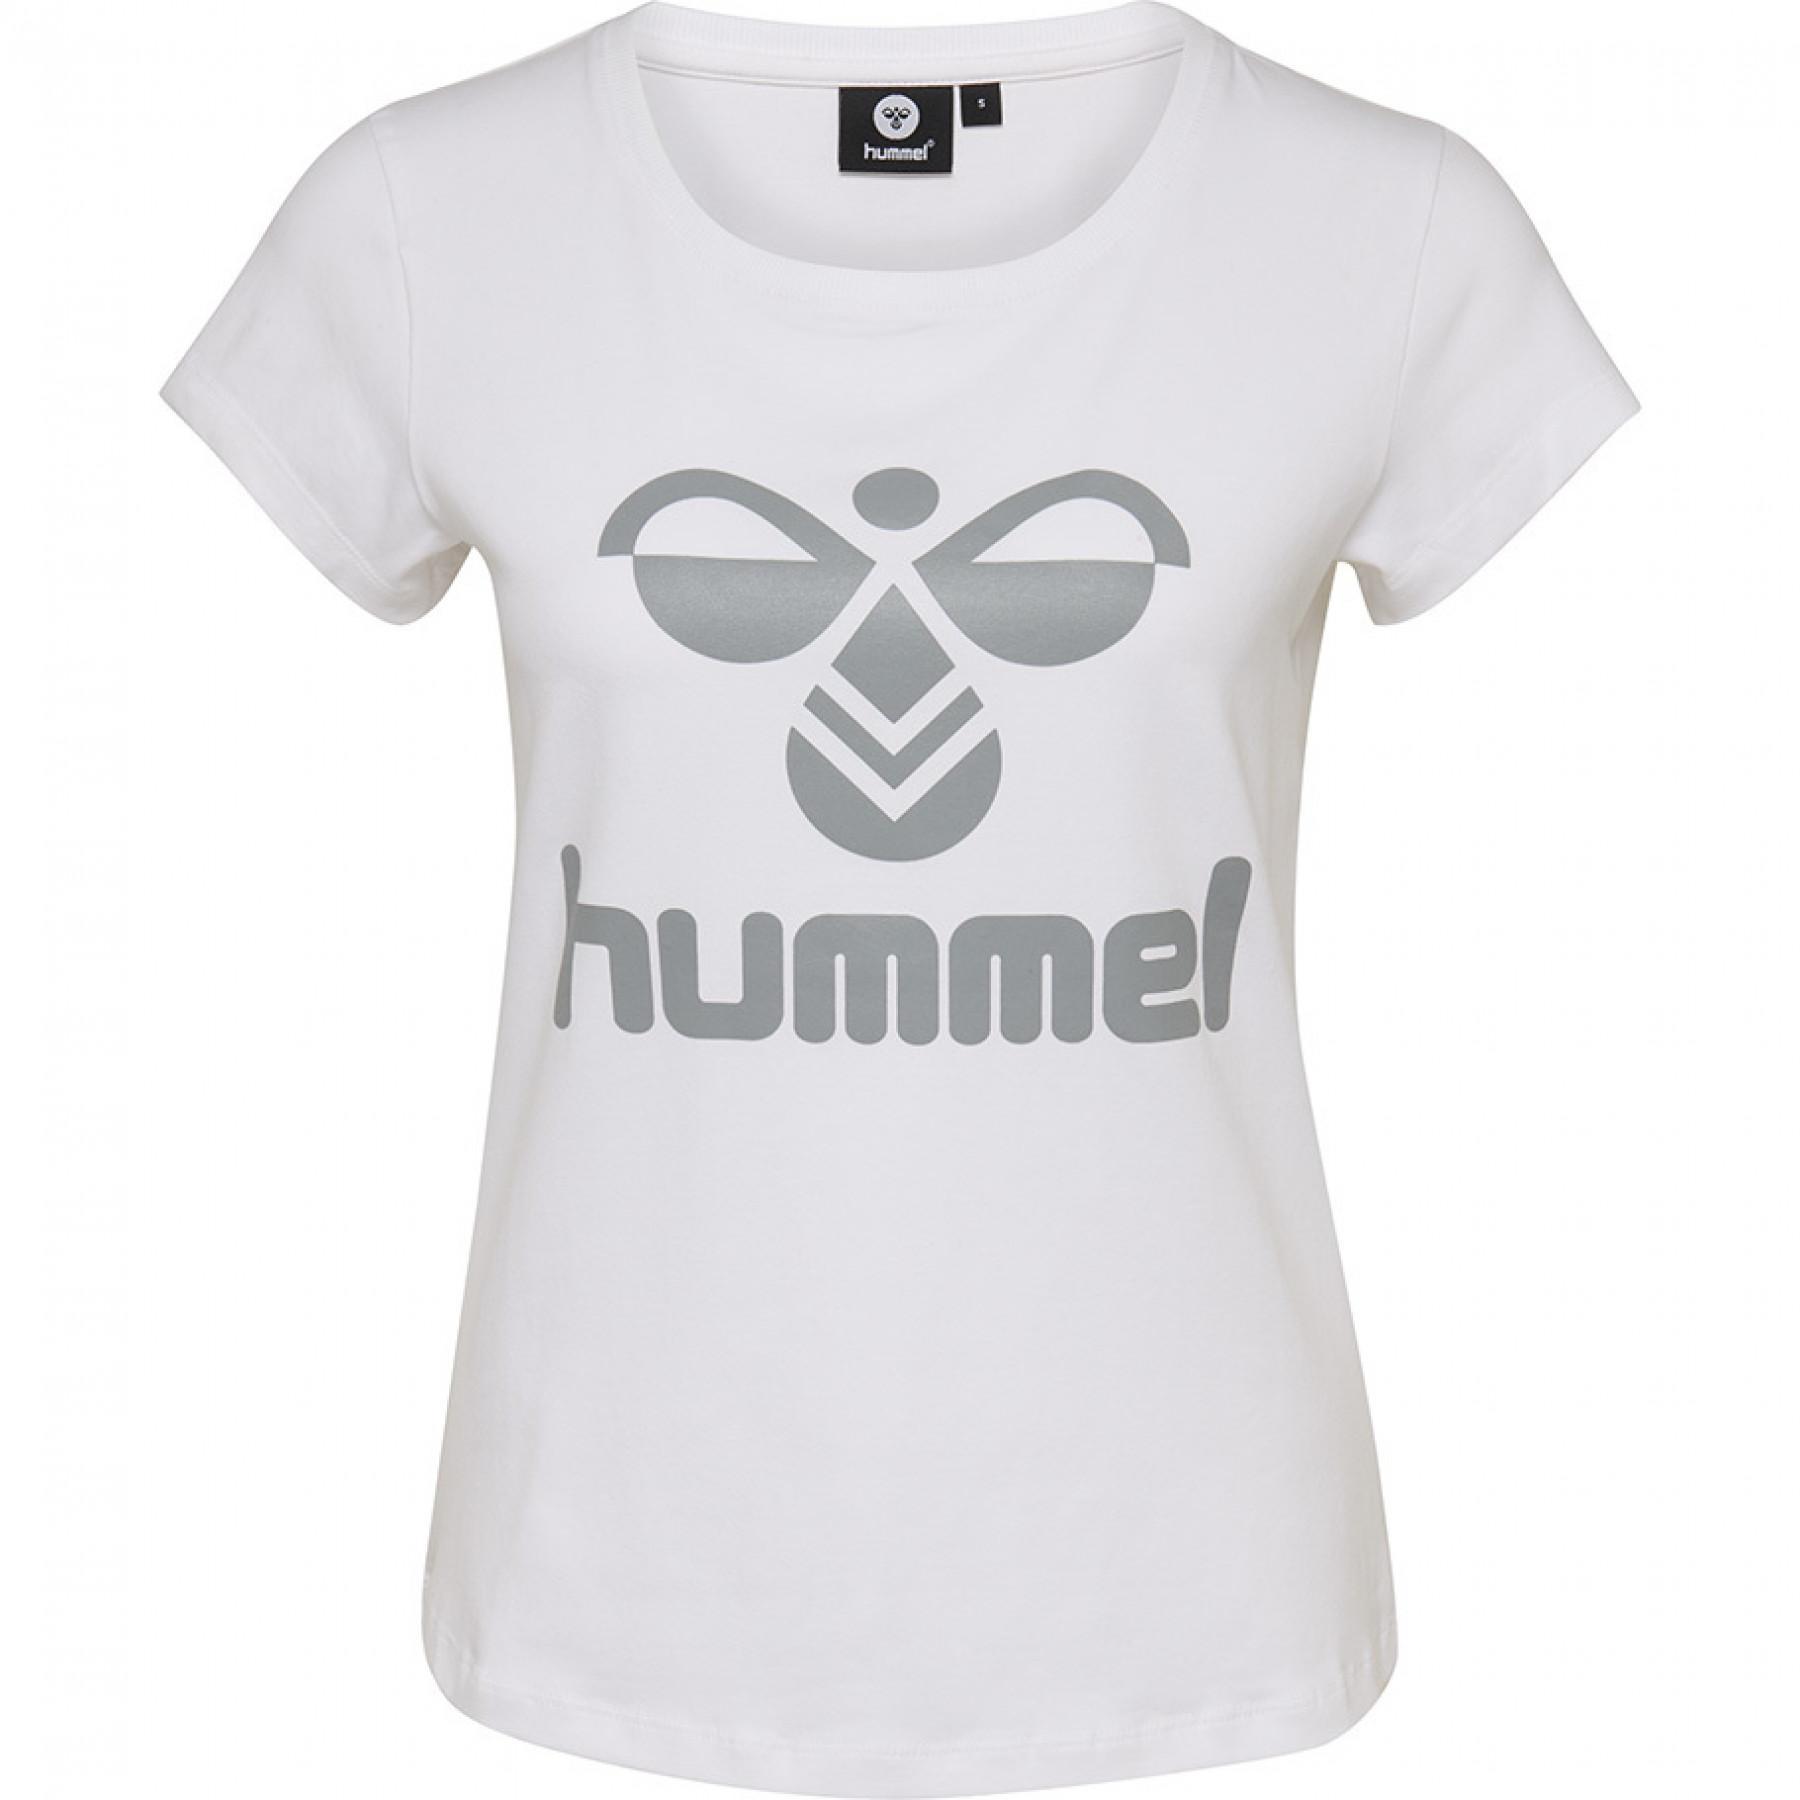 T-shirt femme Hummel jane white grey